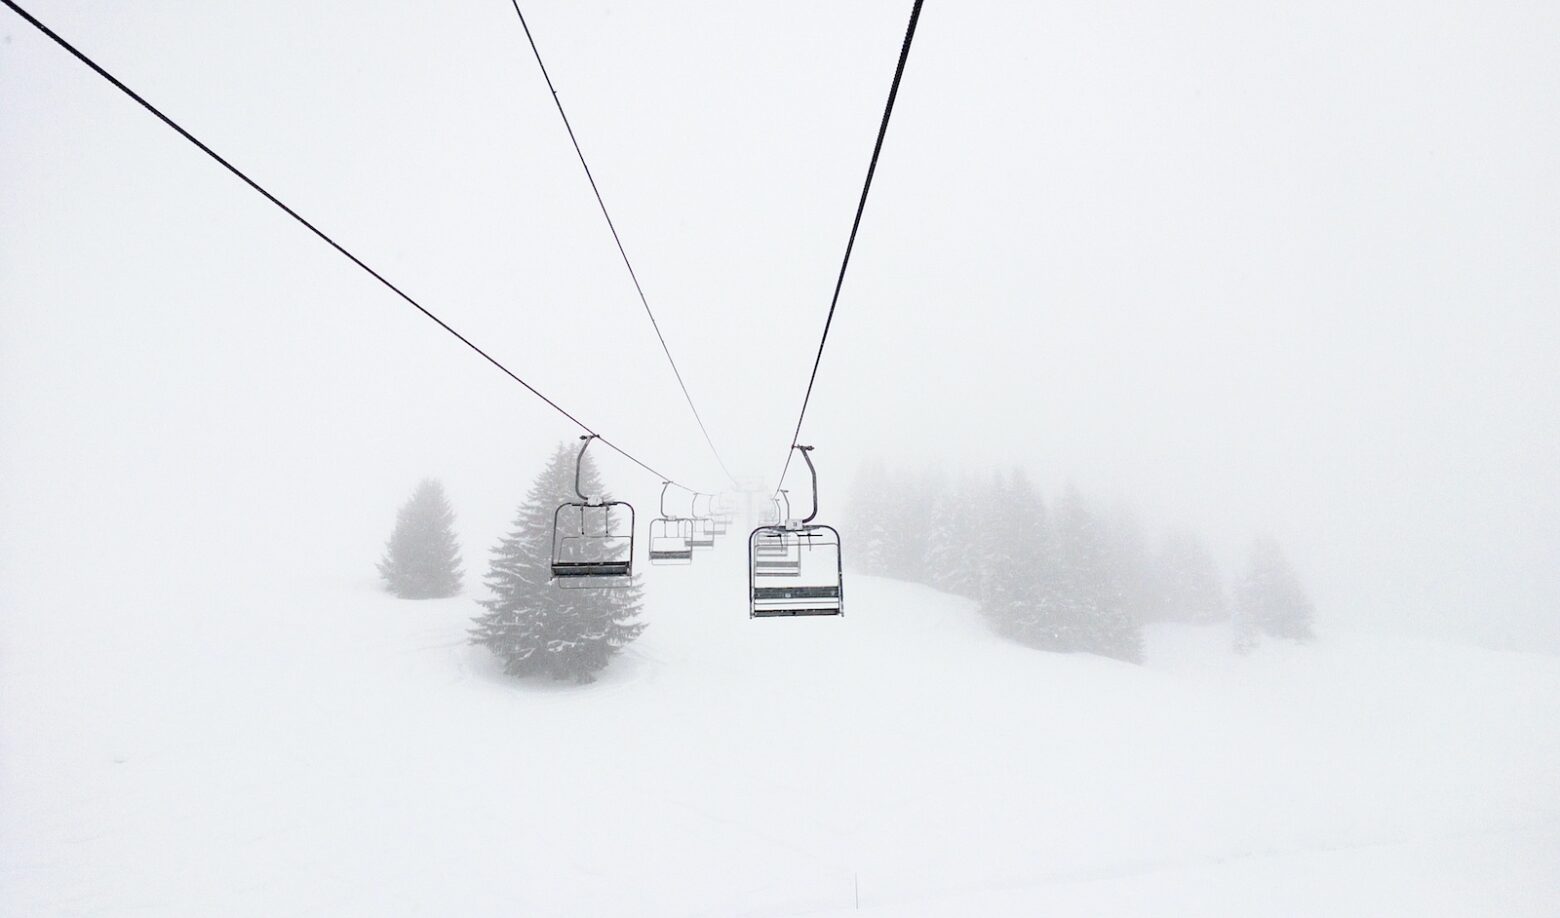 ski lift with snow around